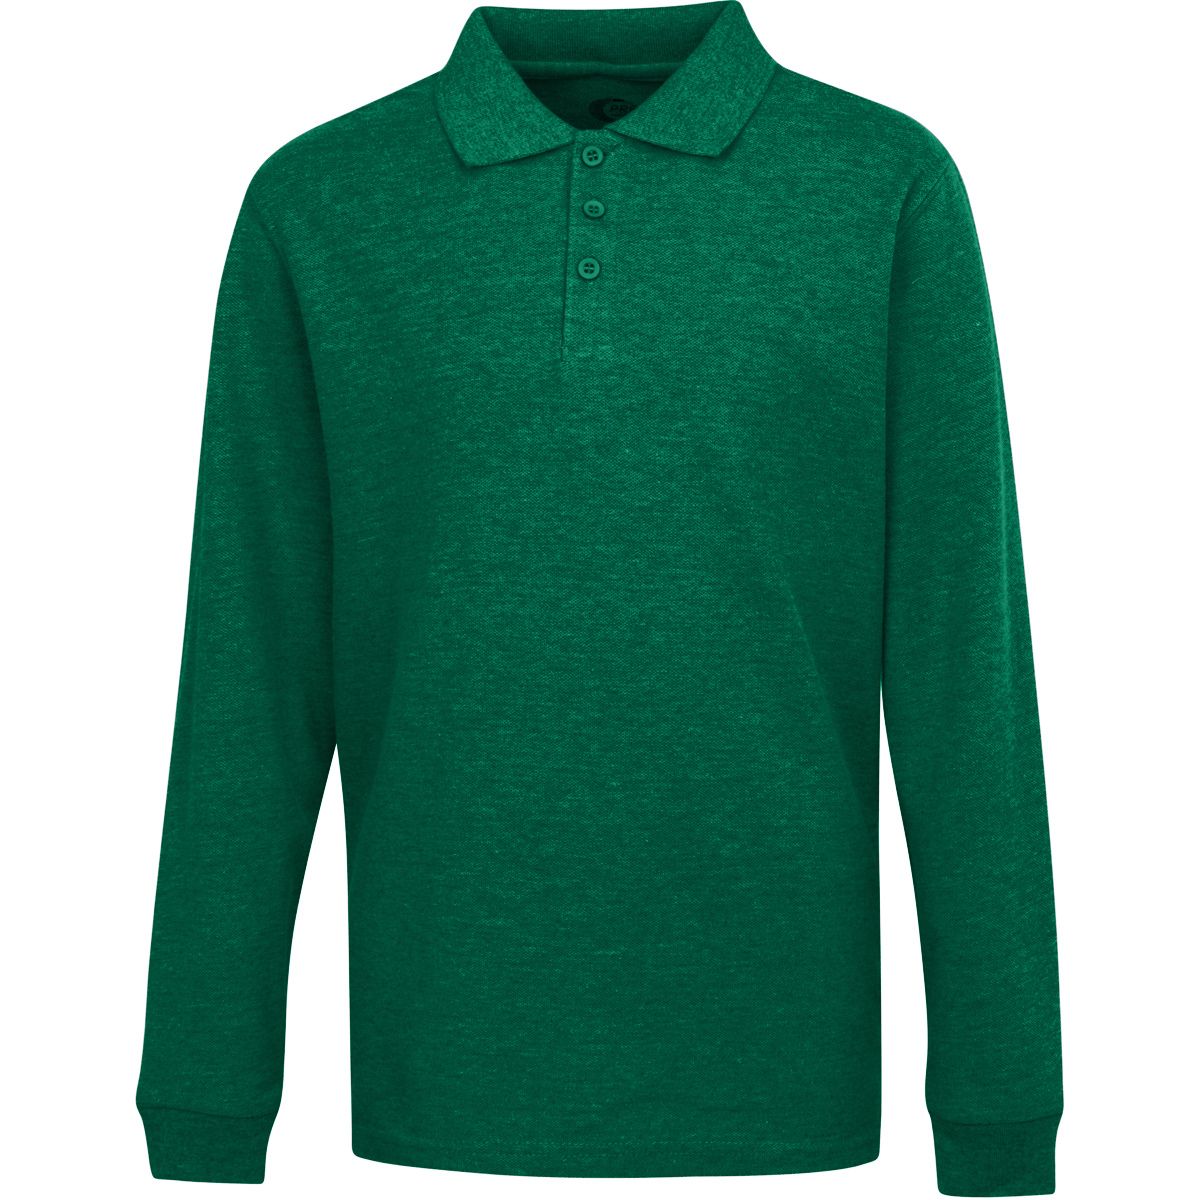 Unisex Long Sleeve Pique Polo Shirt - Kelly Green